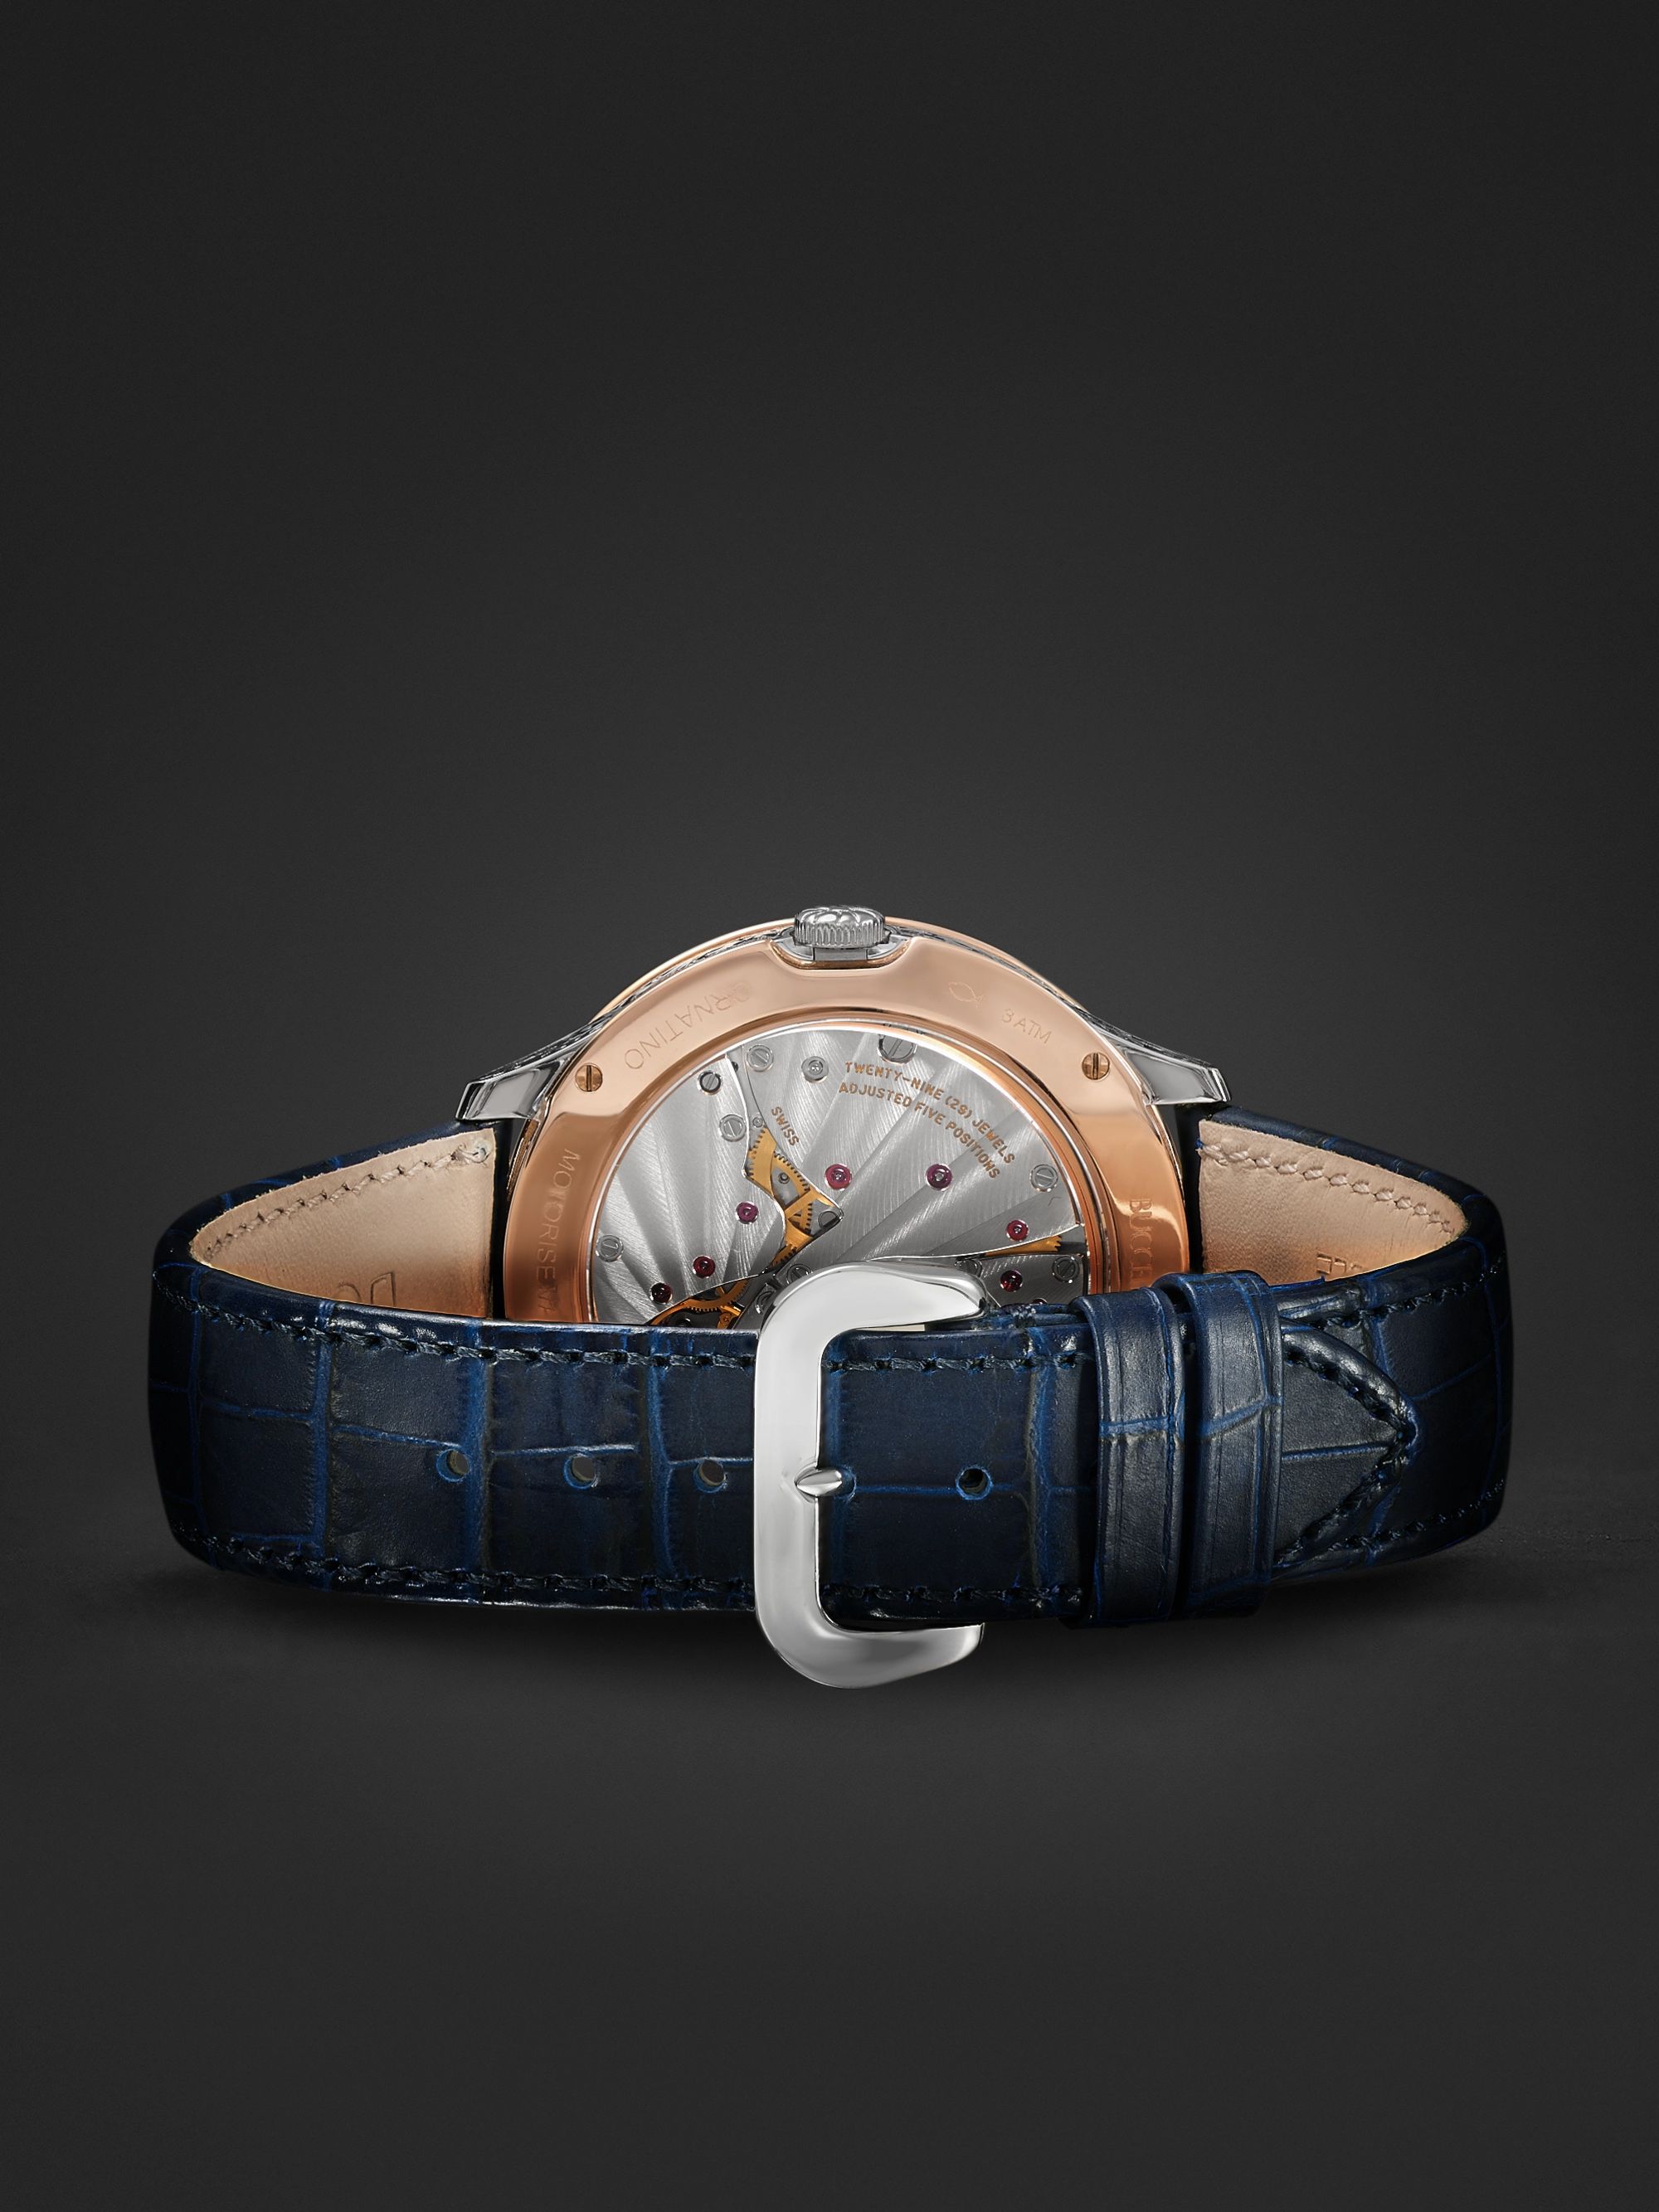 BUCCELLATI Ornatino Automatic 42mm 18-Karat Pink and White Gold and Croc-Effect Leather Watch, Ref. No. WAUMGE013179